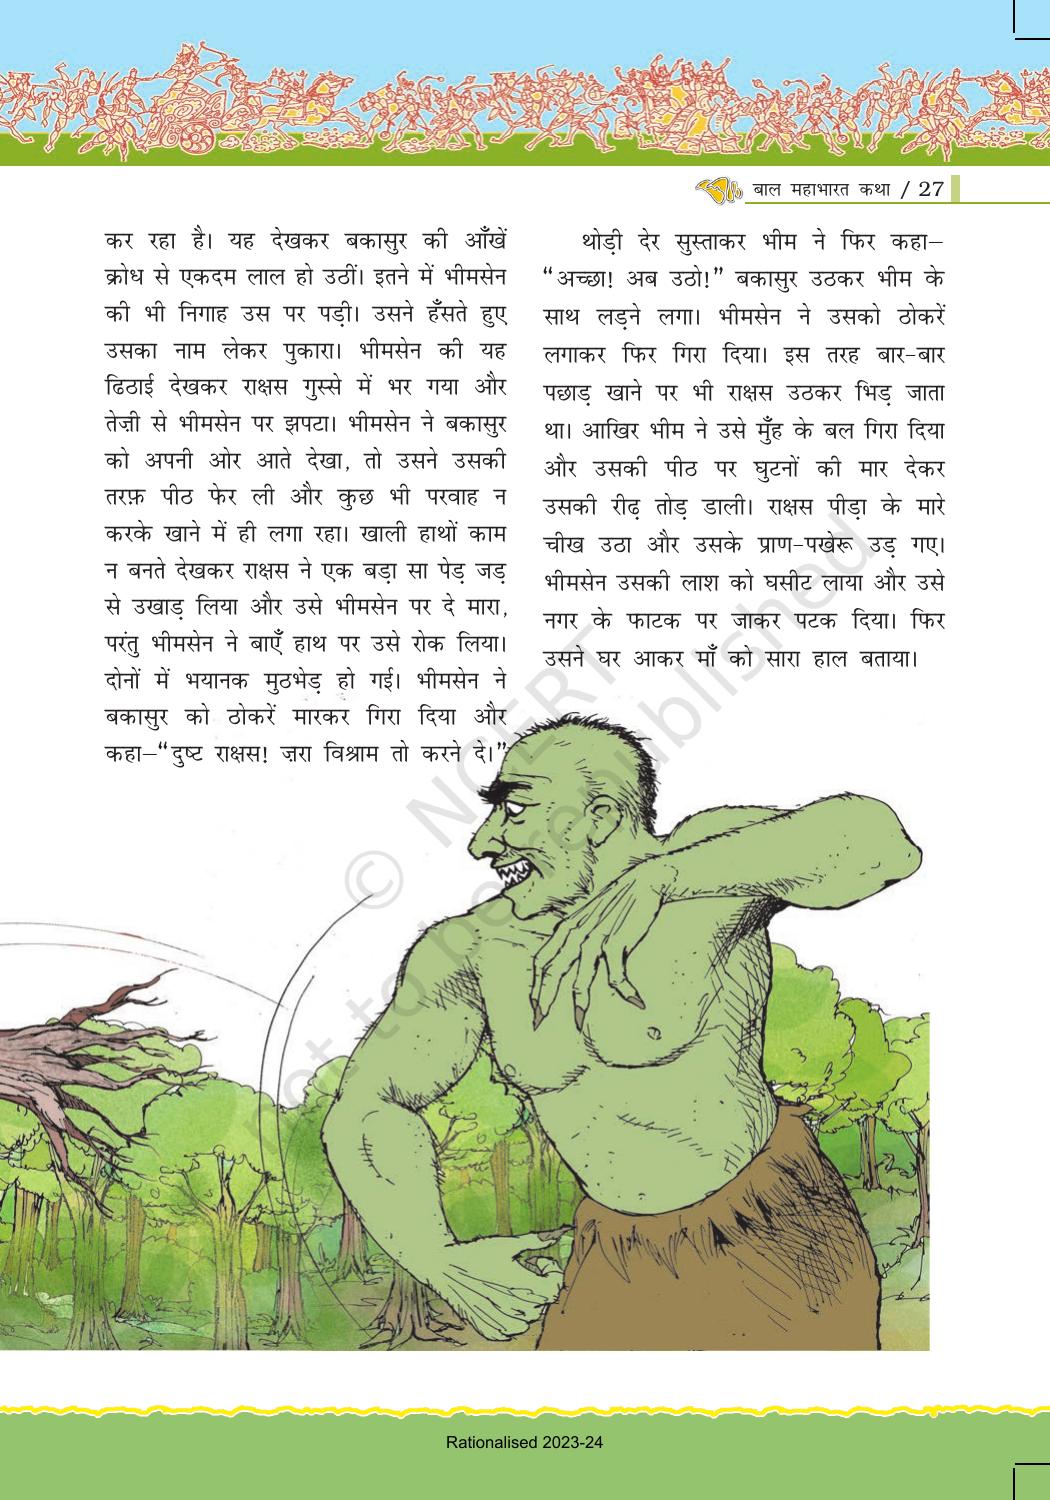 NCERT Book for Class 7 Hindi: Chapter 1-बाल महाभारत कथा - Page 27